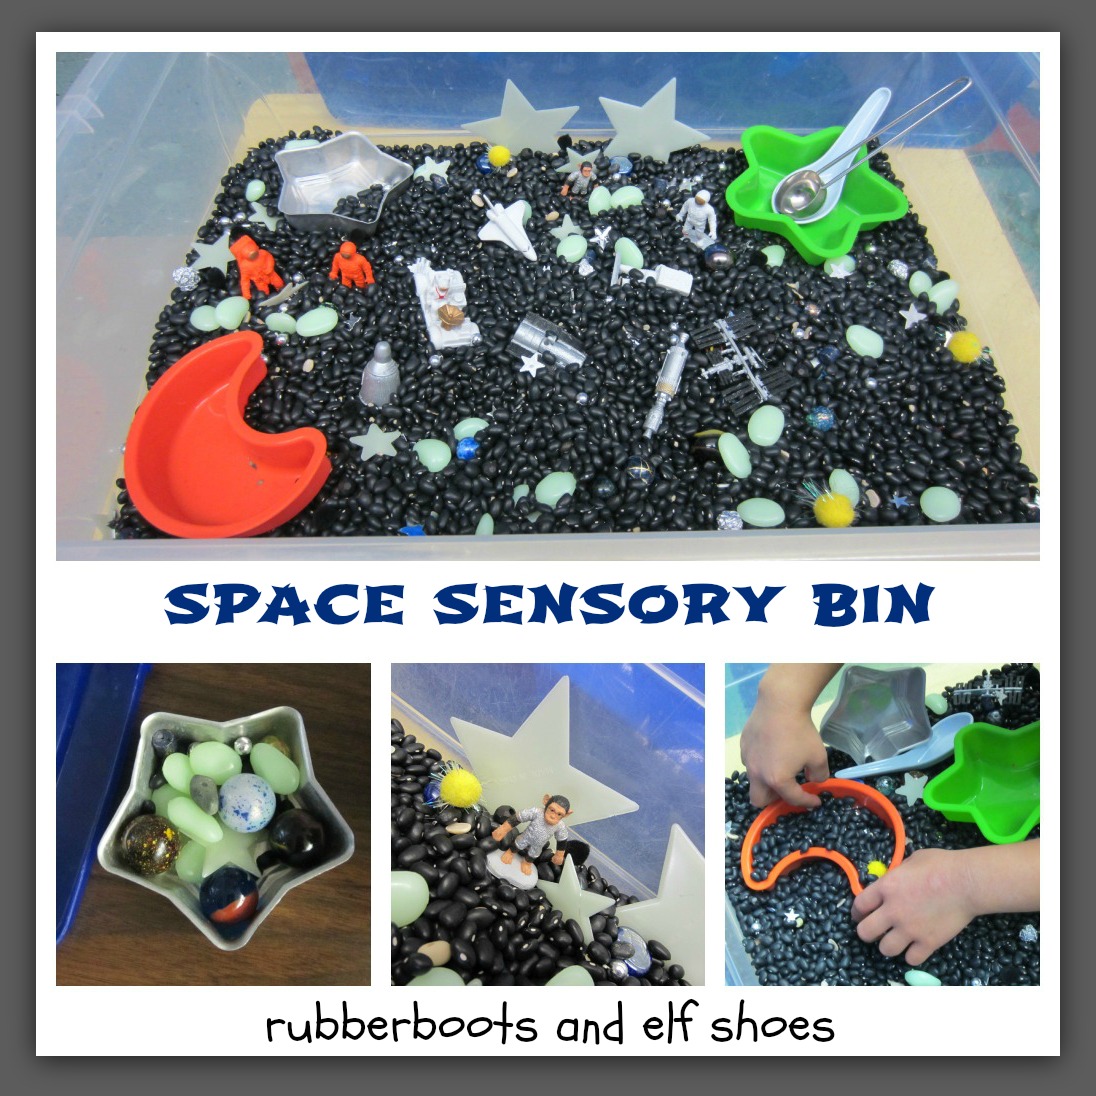 organizing sensory bin stuff - rubber boots and elf shoes